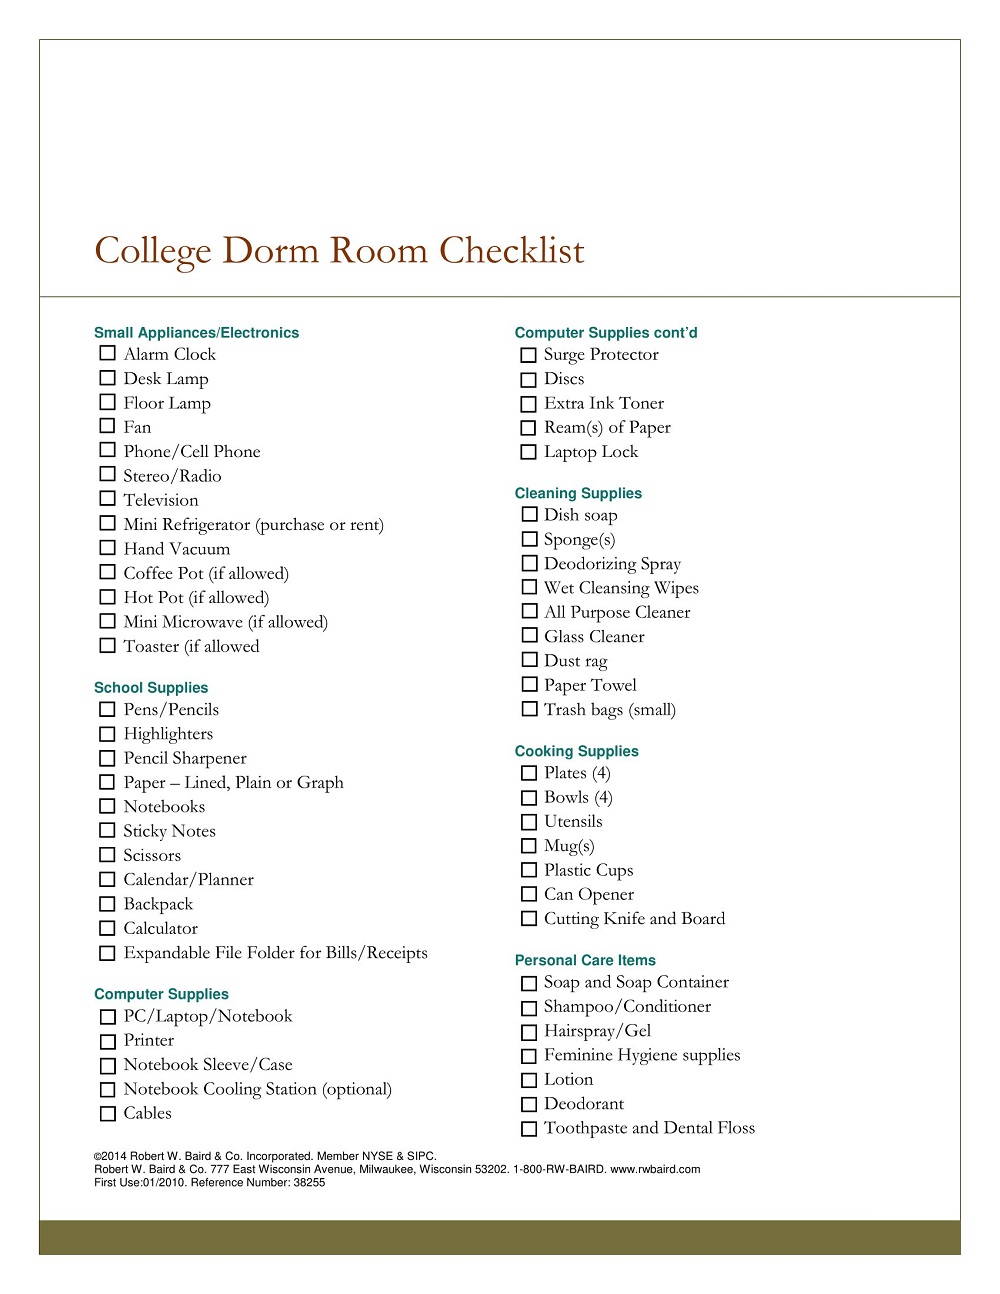 College Room Checklist Template